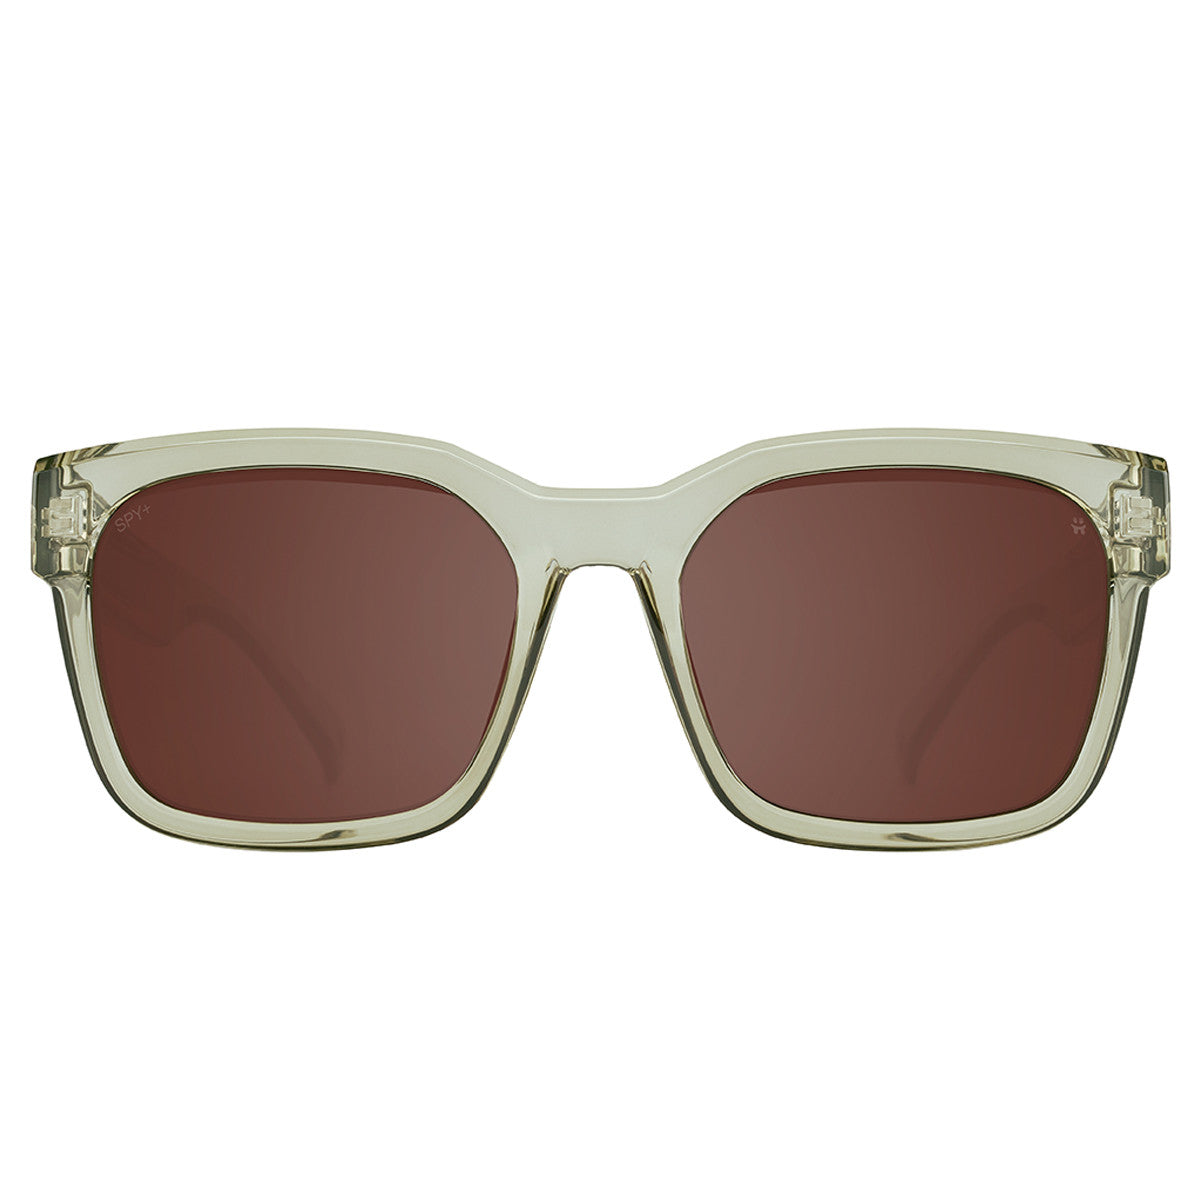 Spy Dessa Sunglasses  Translucent Dusty Olive Small-Medium S-M 53-56